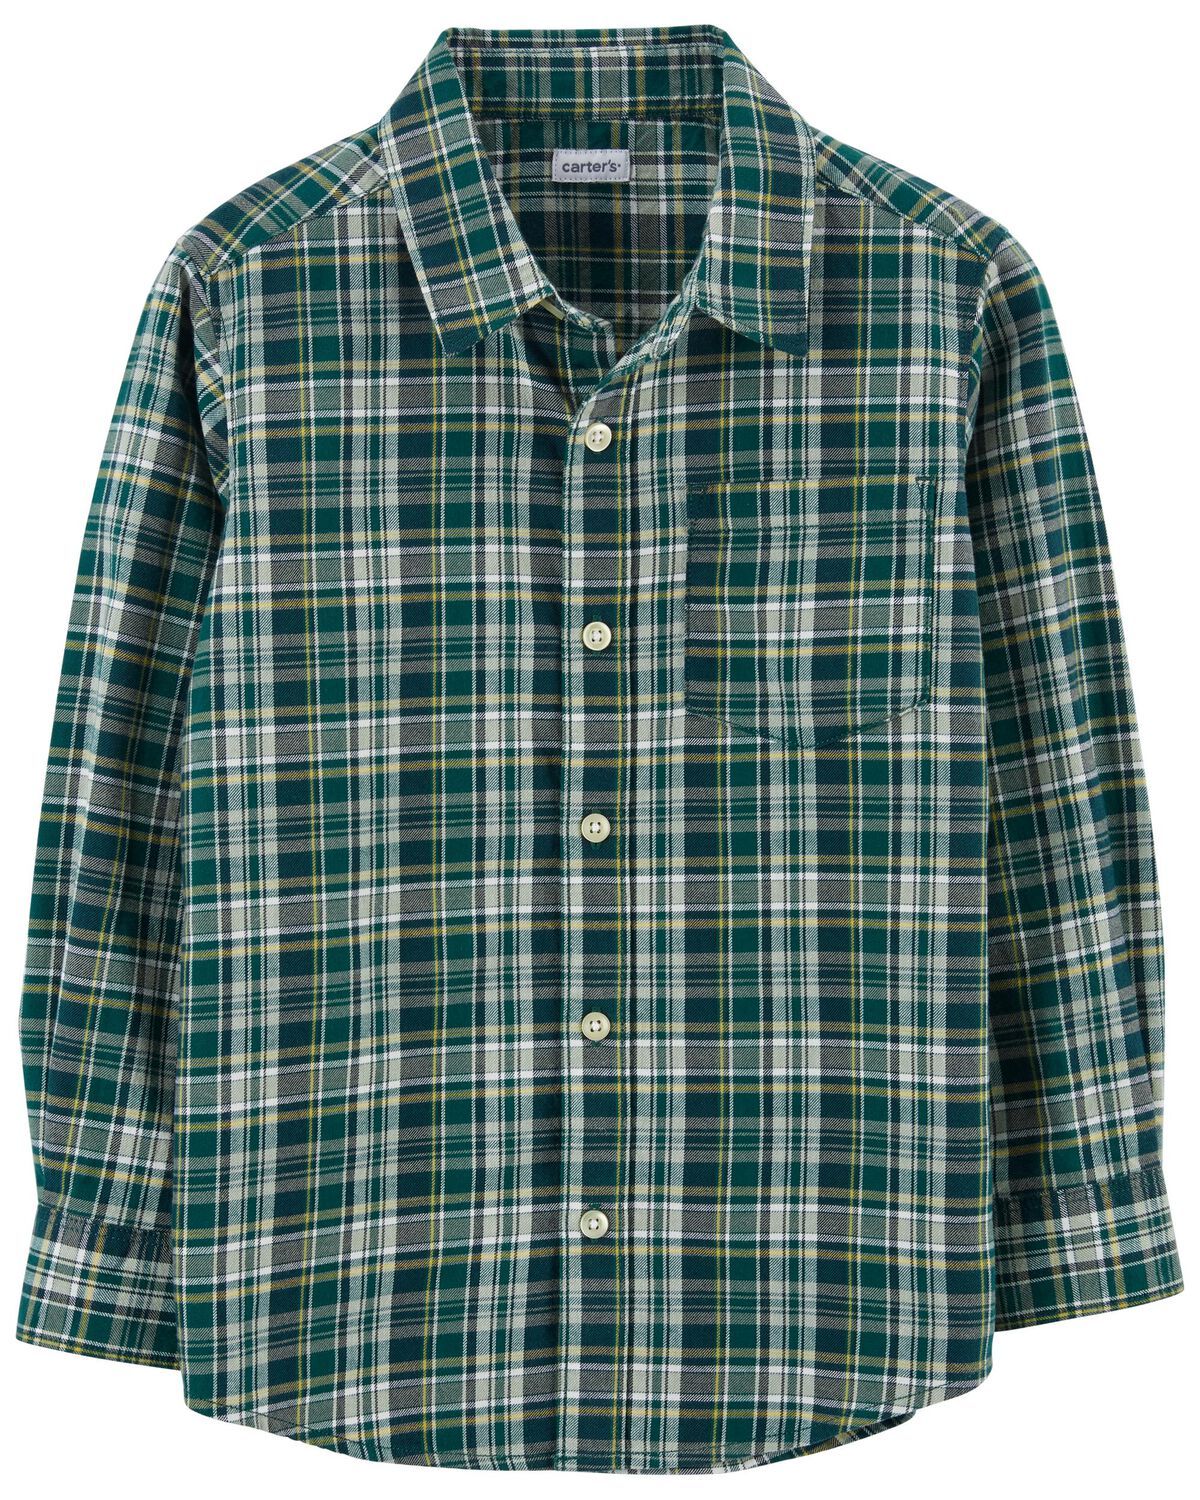 Green Kid Plaid Button-Front Shirt | carters.com | Carter's